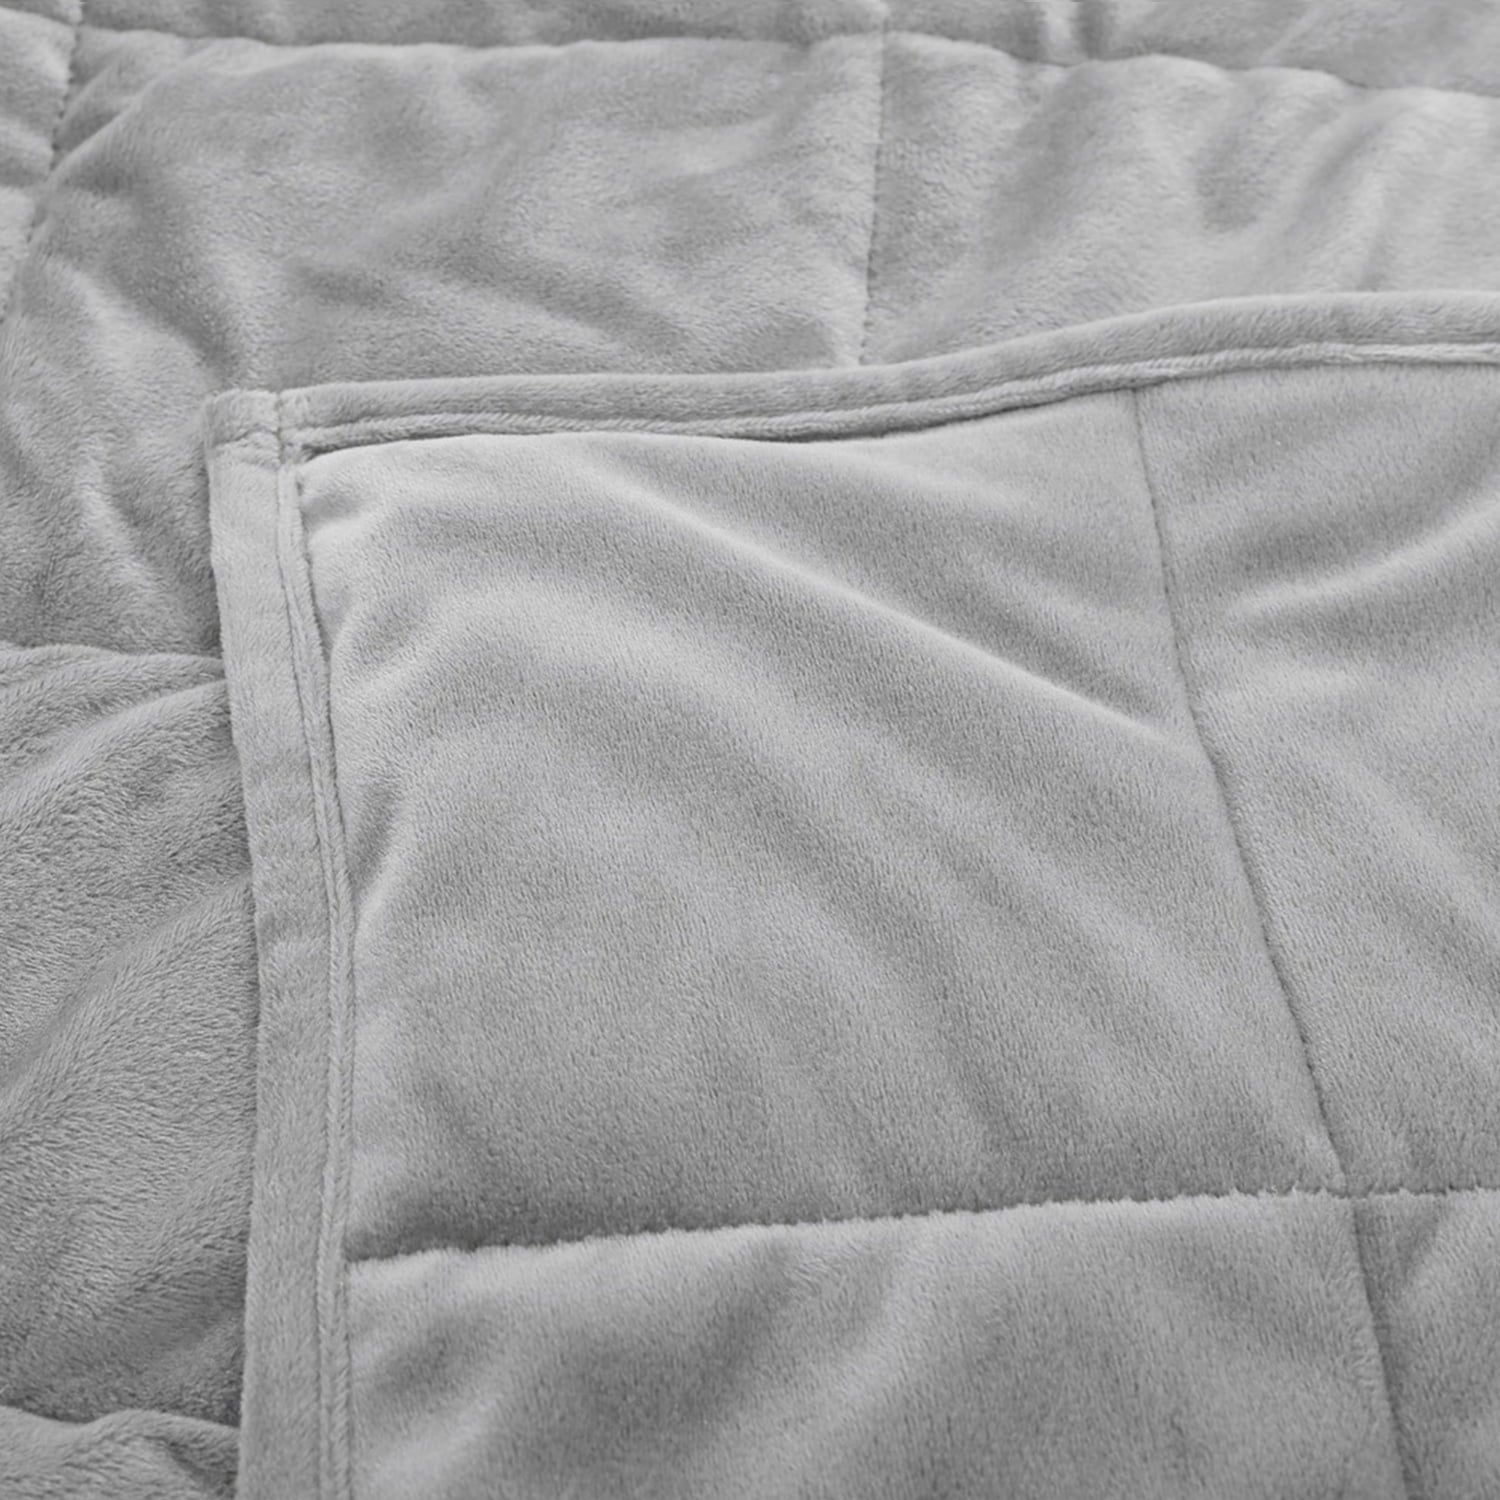 Silky Sedona House 15lb Silky Velvet Weighted Blanket, Reversible& Machine Washable Heavy Blanket ,Grey, 60X80 inch